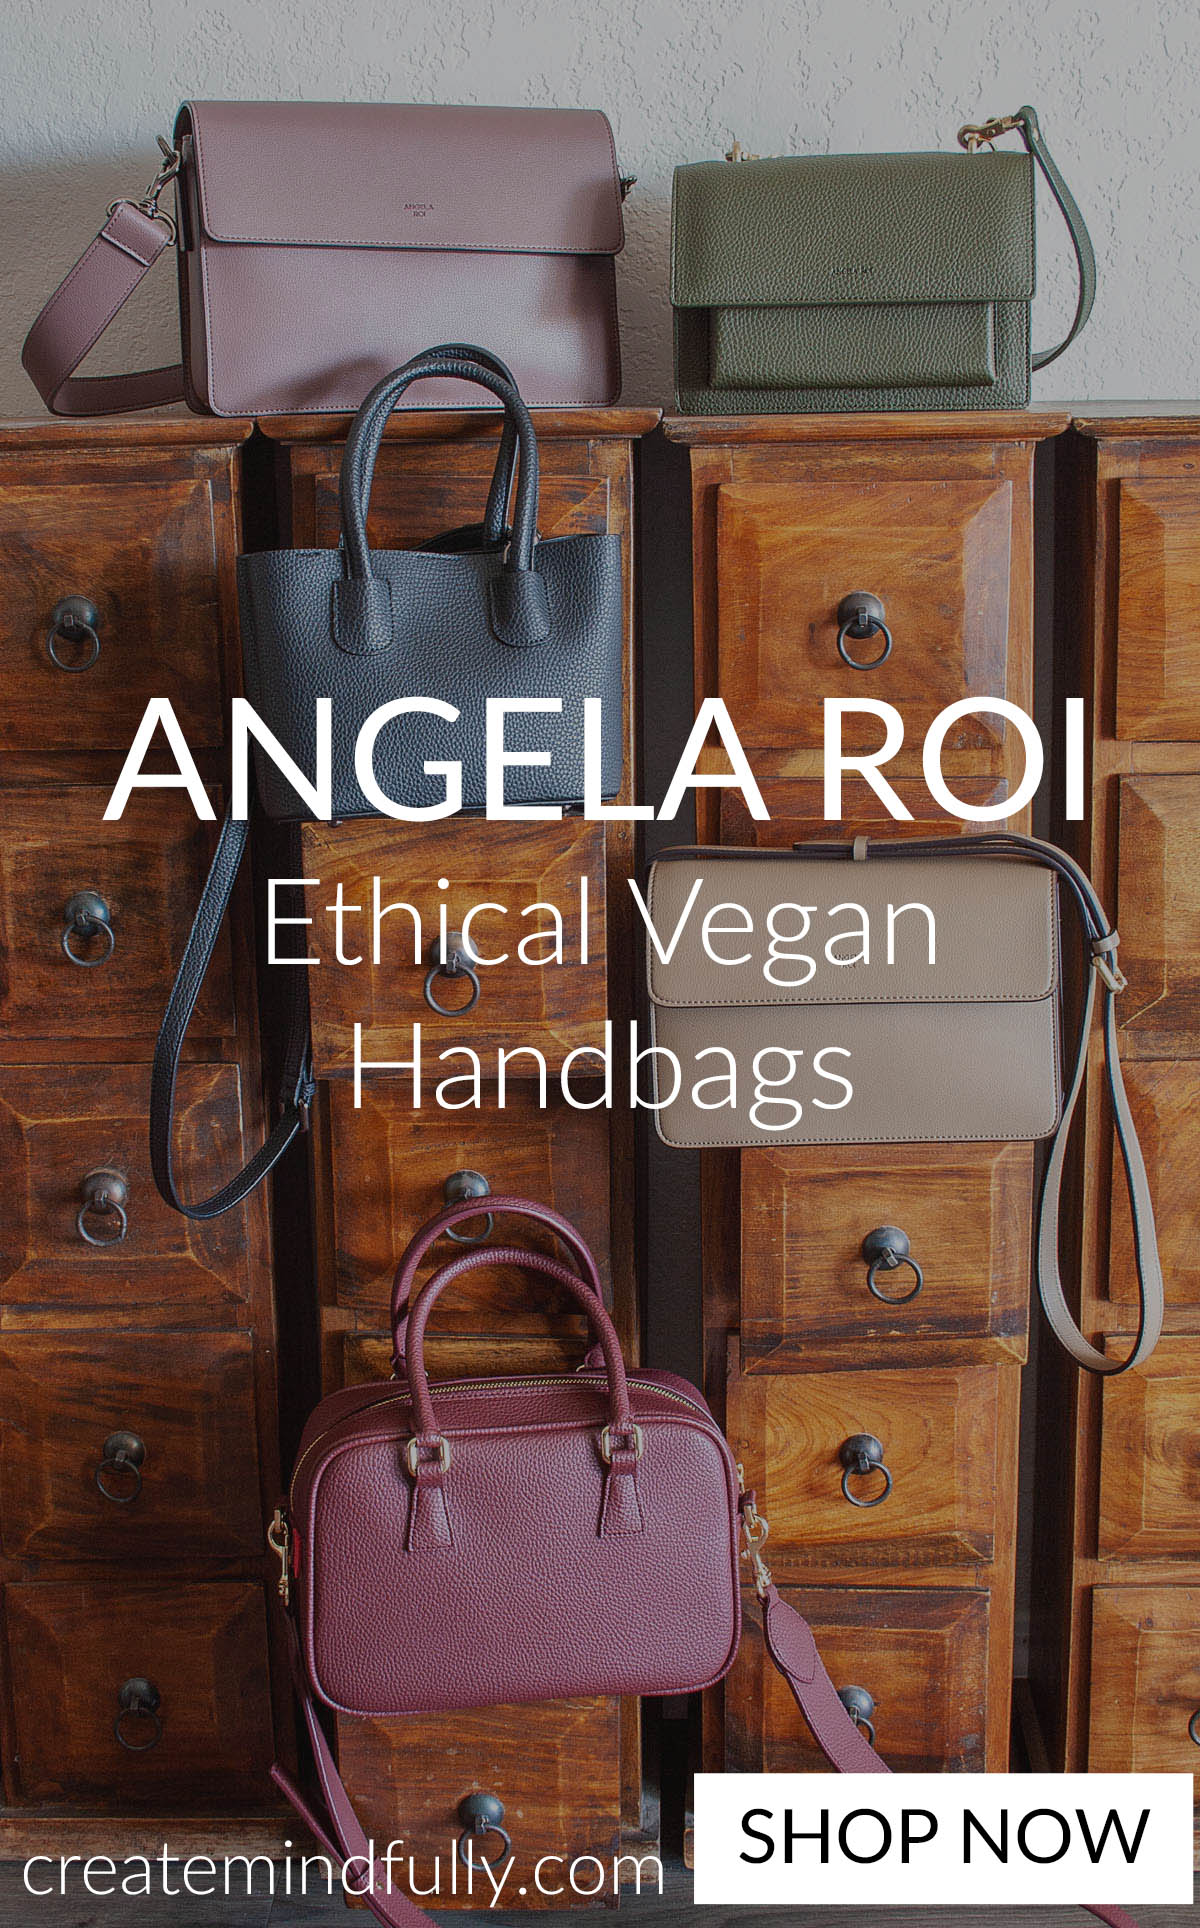 "Angela Roi ethical vegan handbags" written on photo of 5 purses